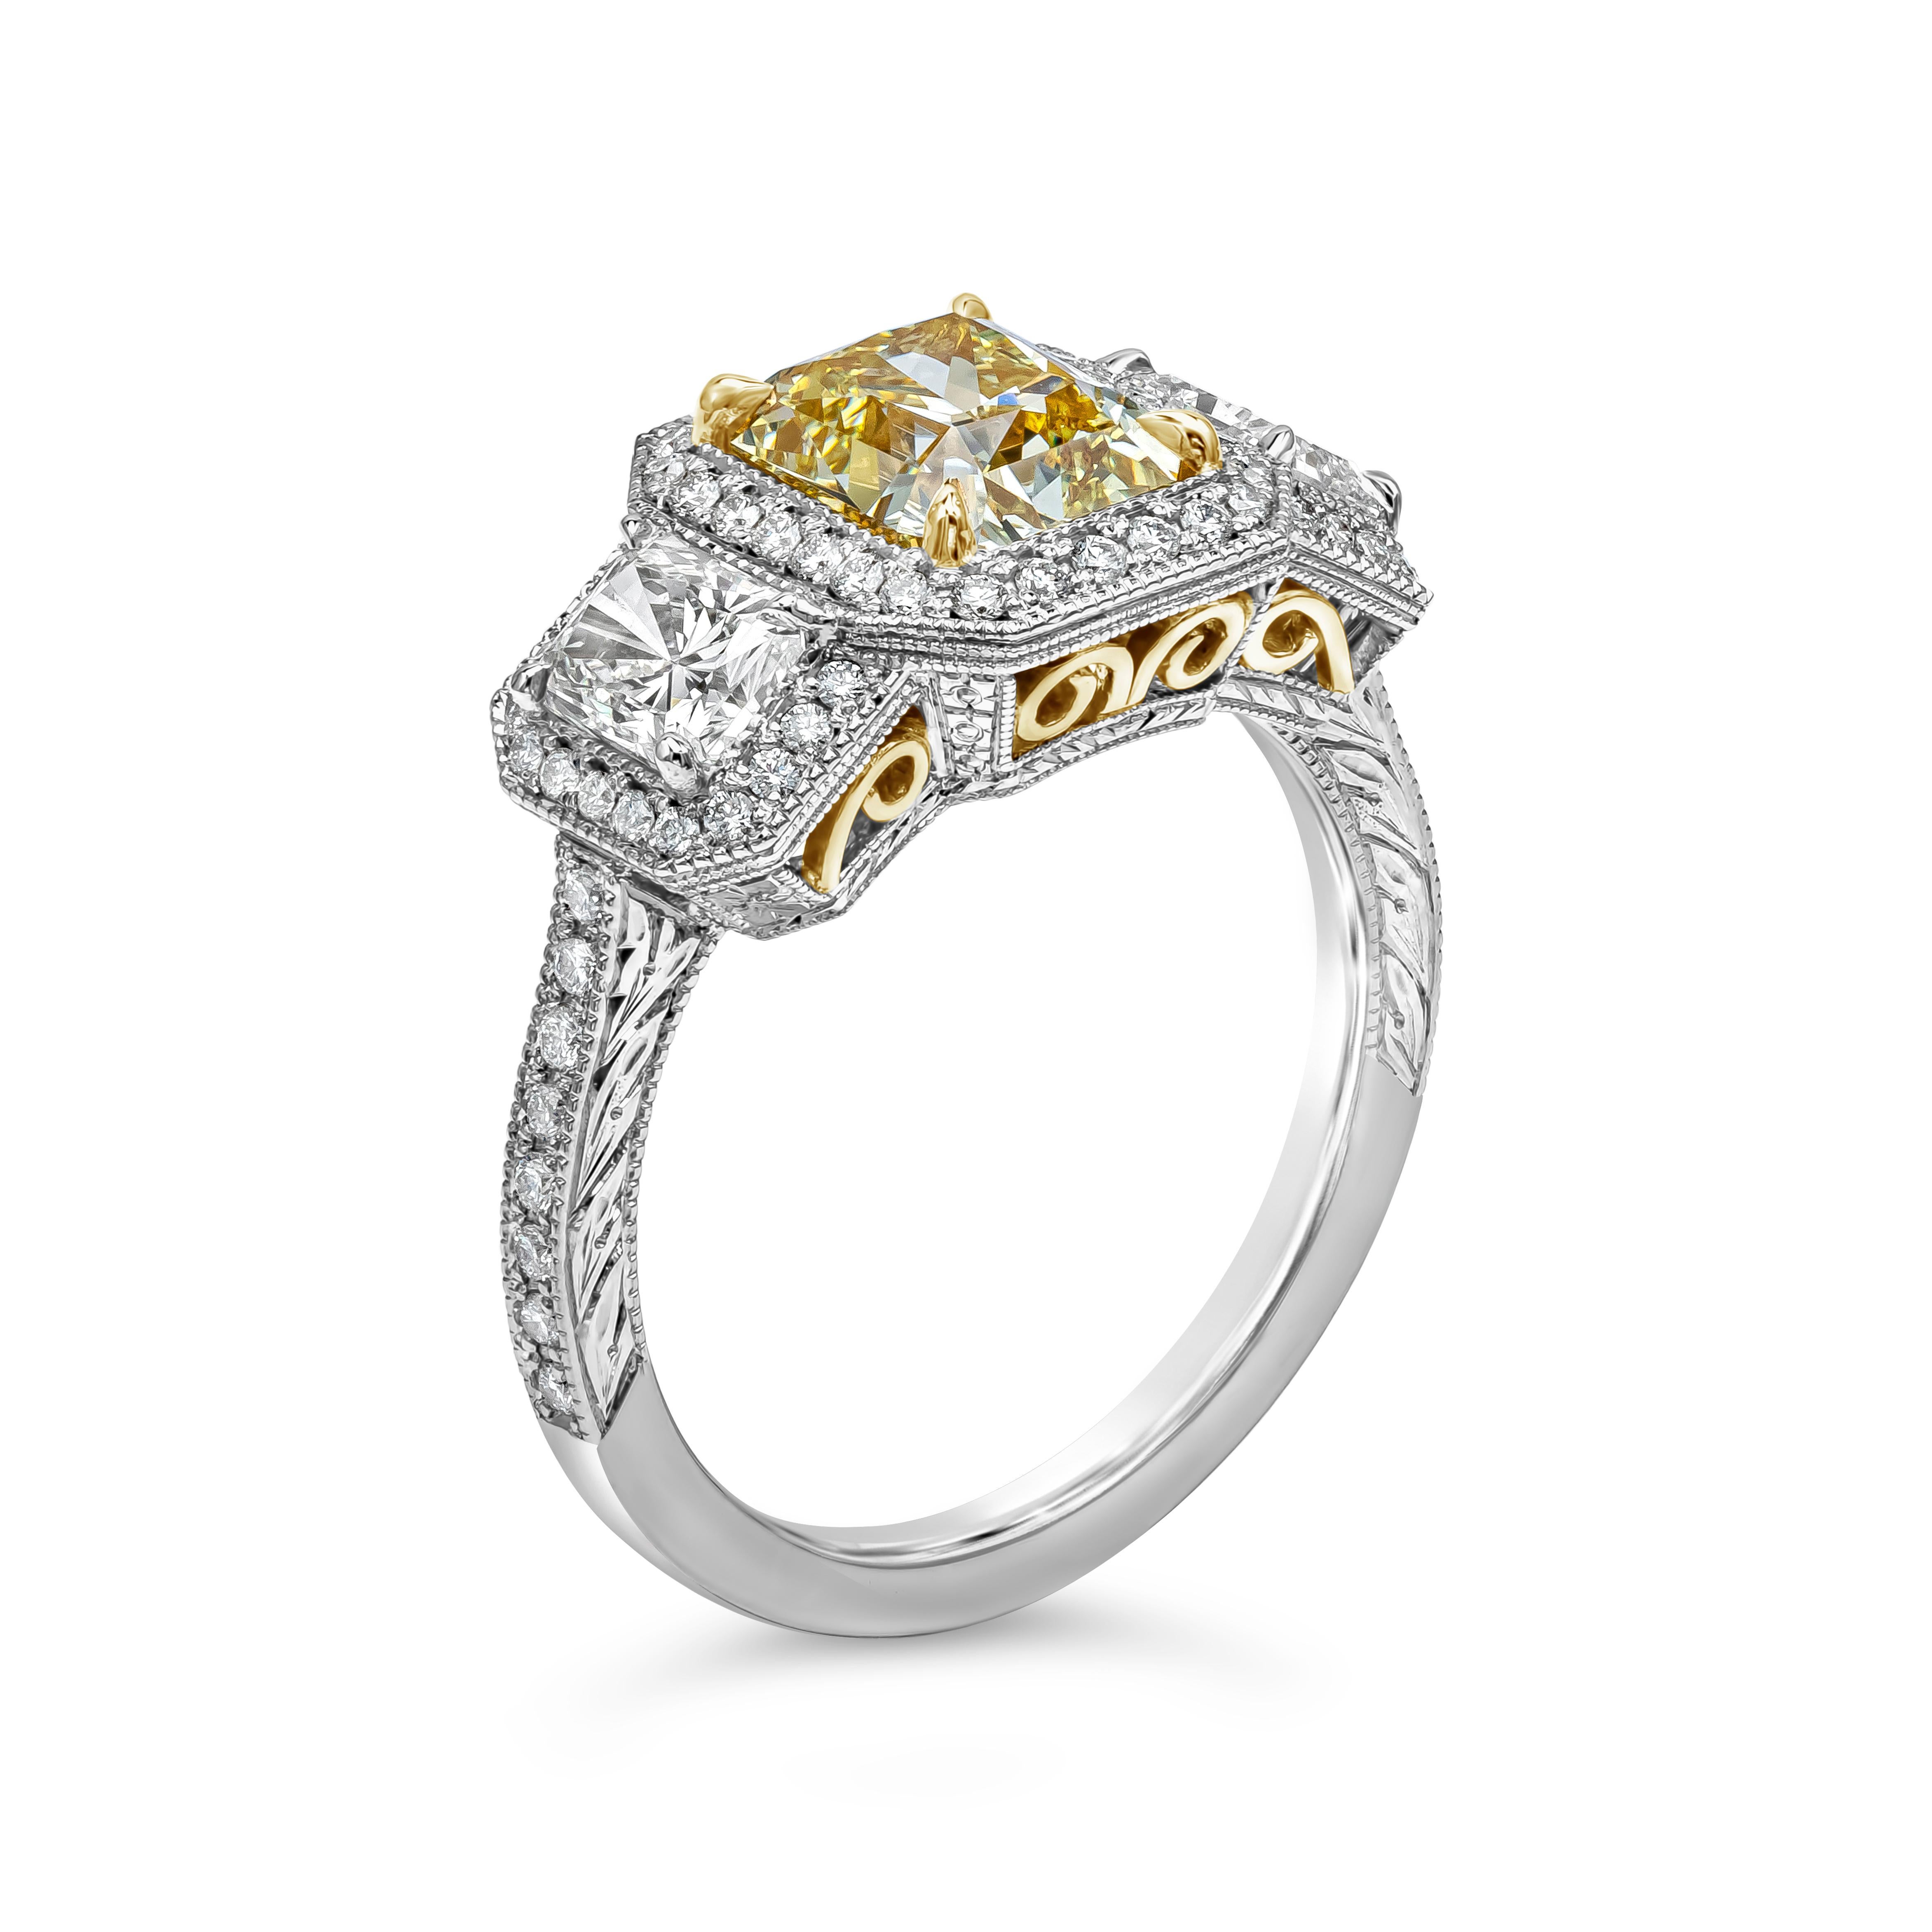 3 carat yellow diamond ring